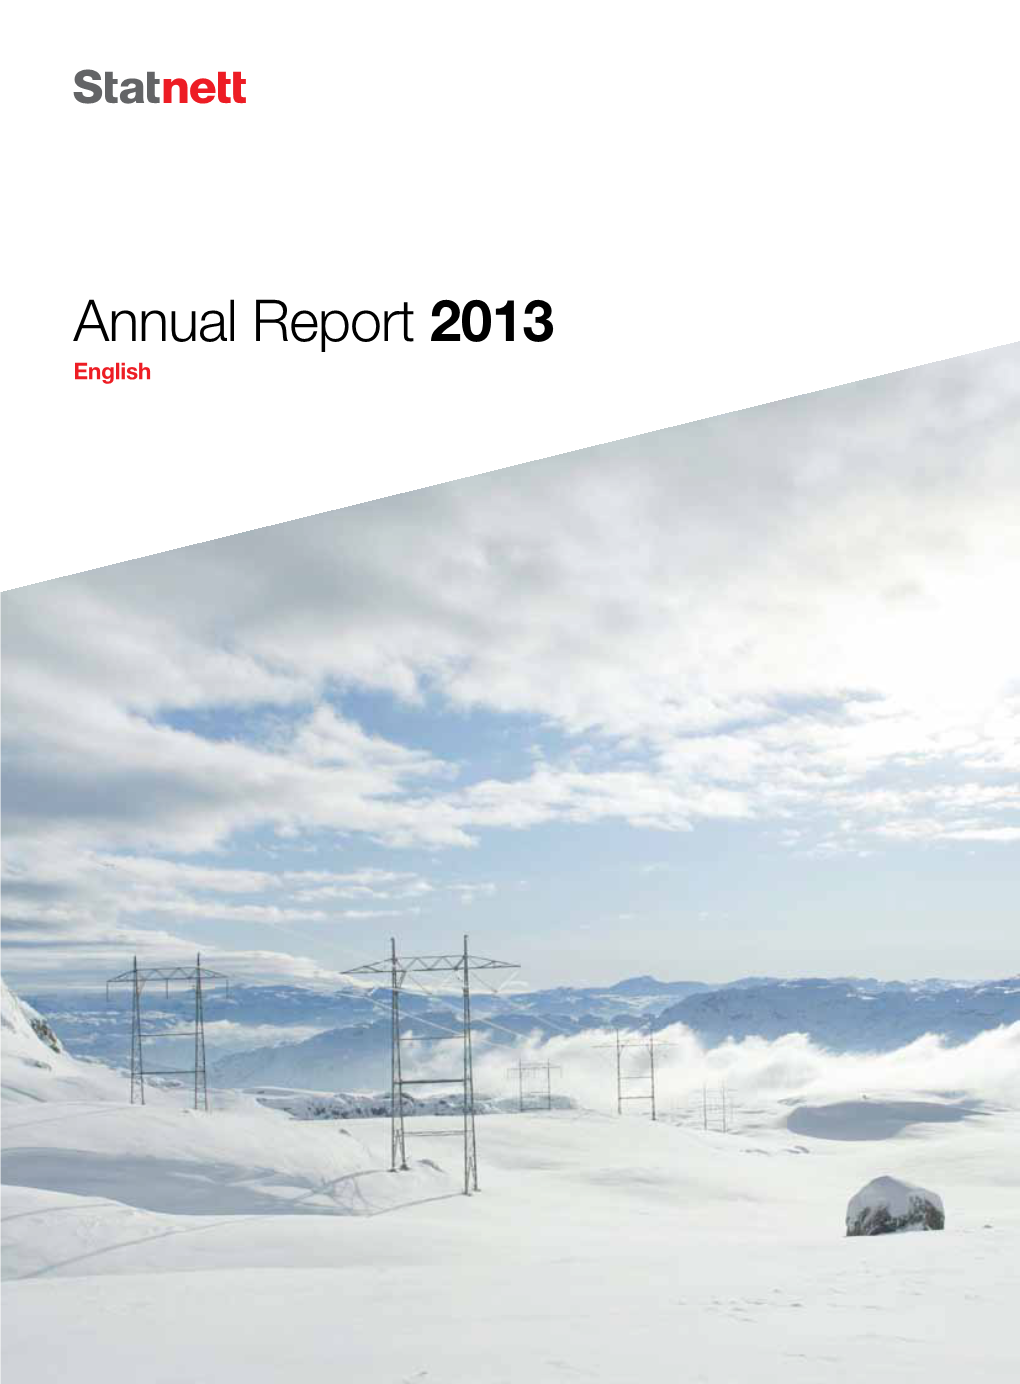 Statnett Annual Report 2013